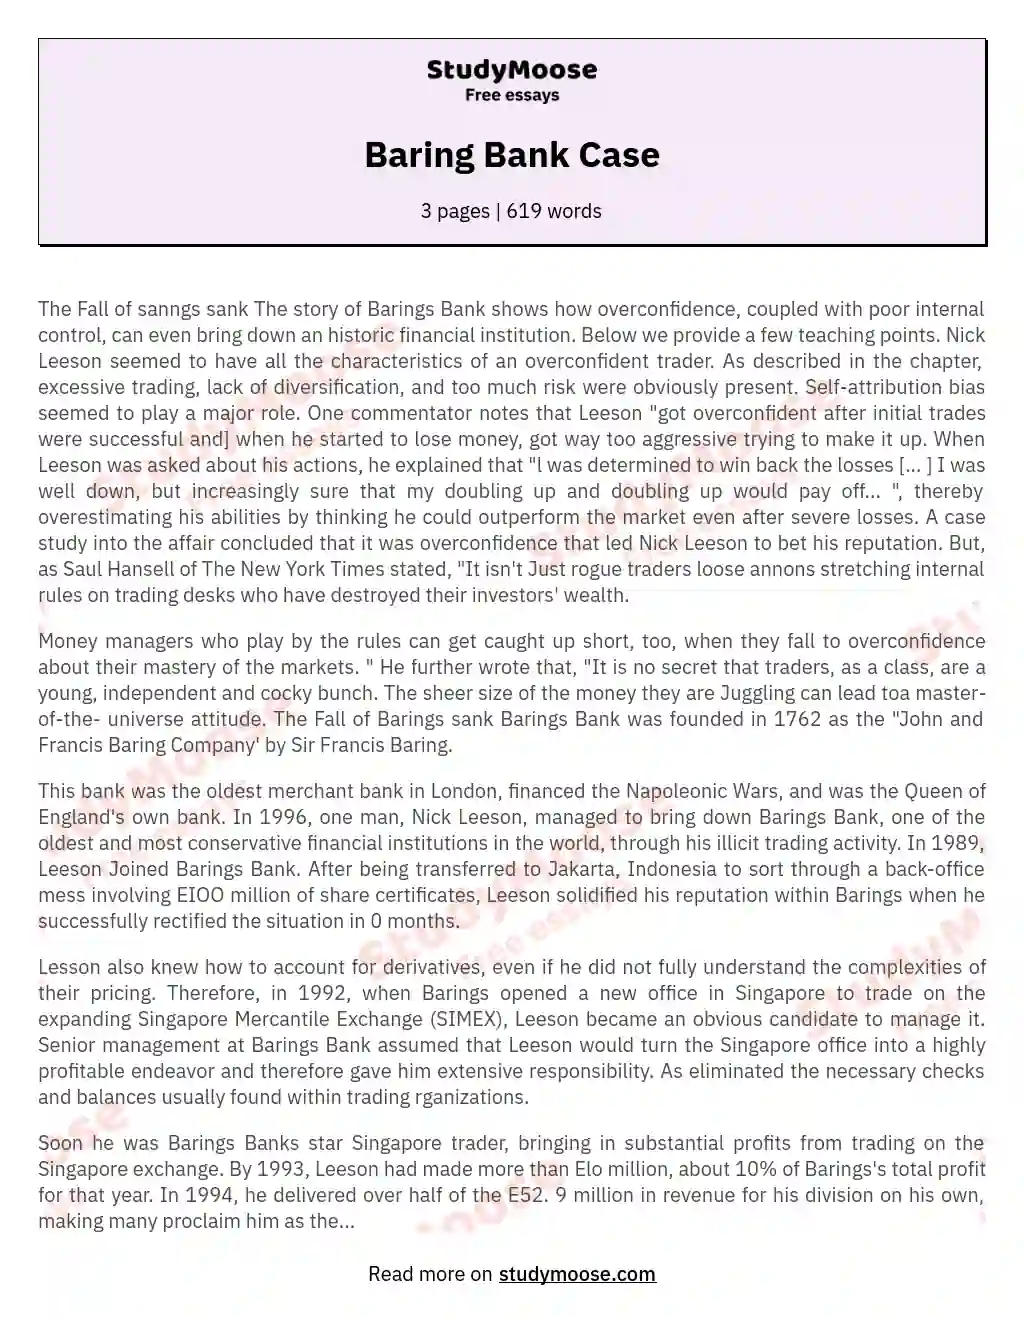 Baring Bank Case essay